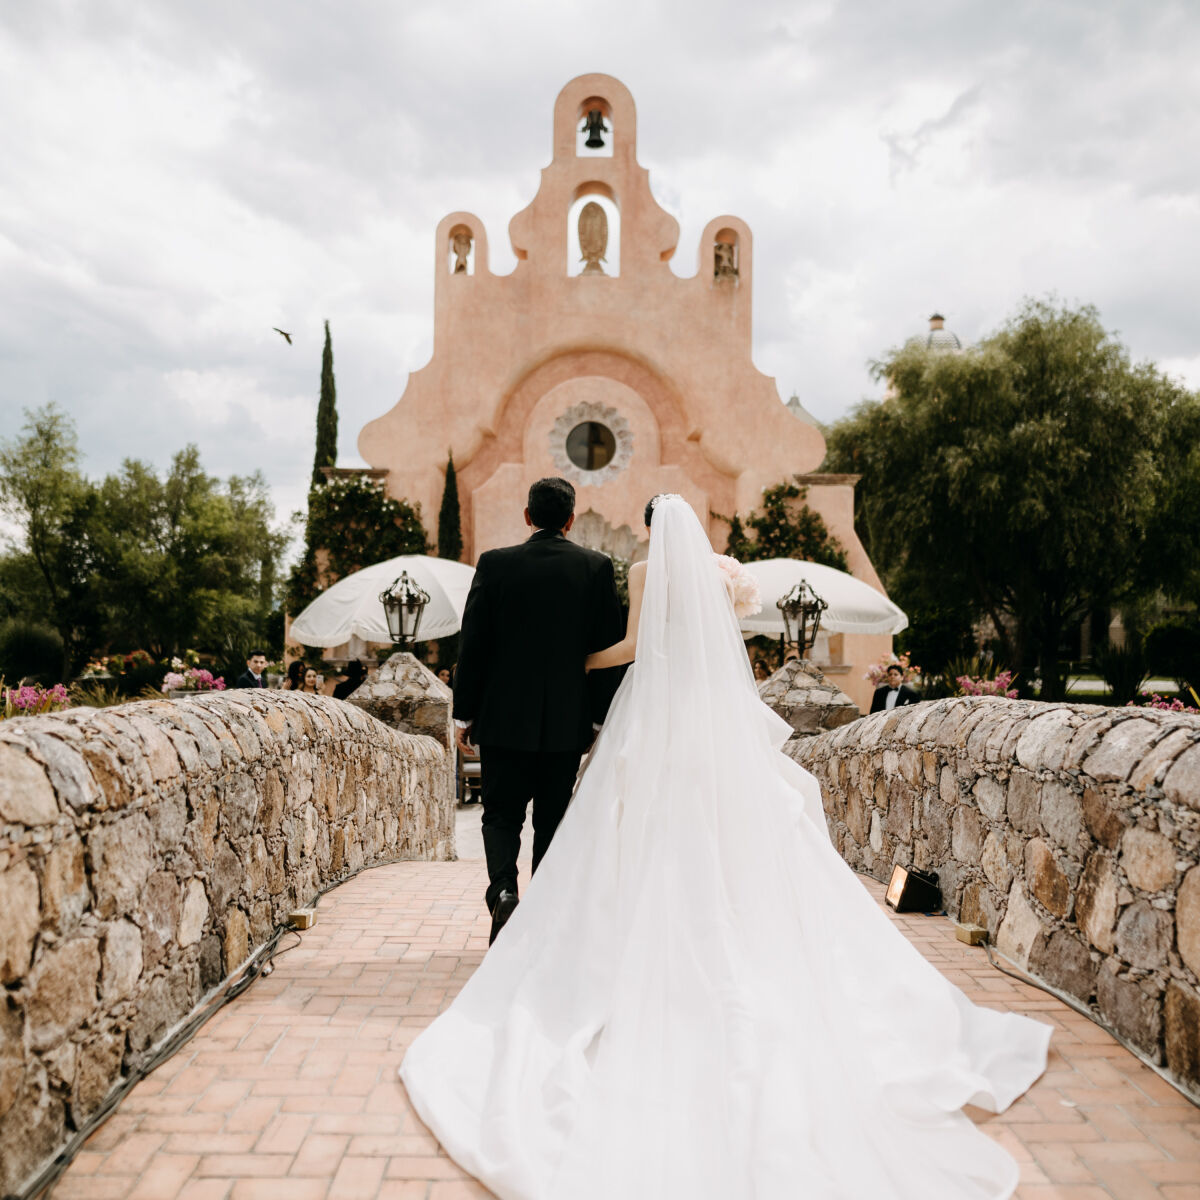 Mexican wedding: couple walking across stone bride to adobe style church